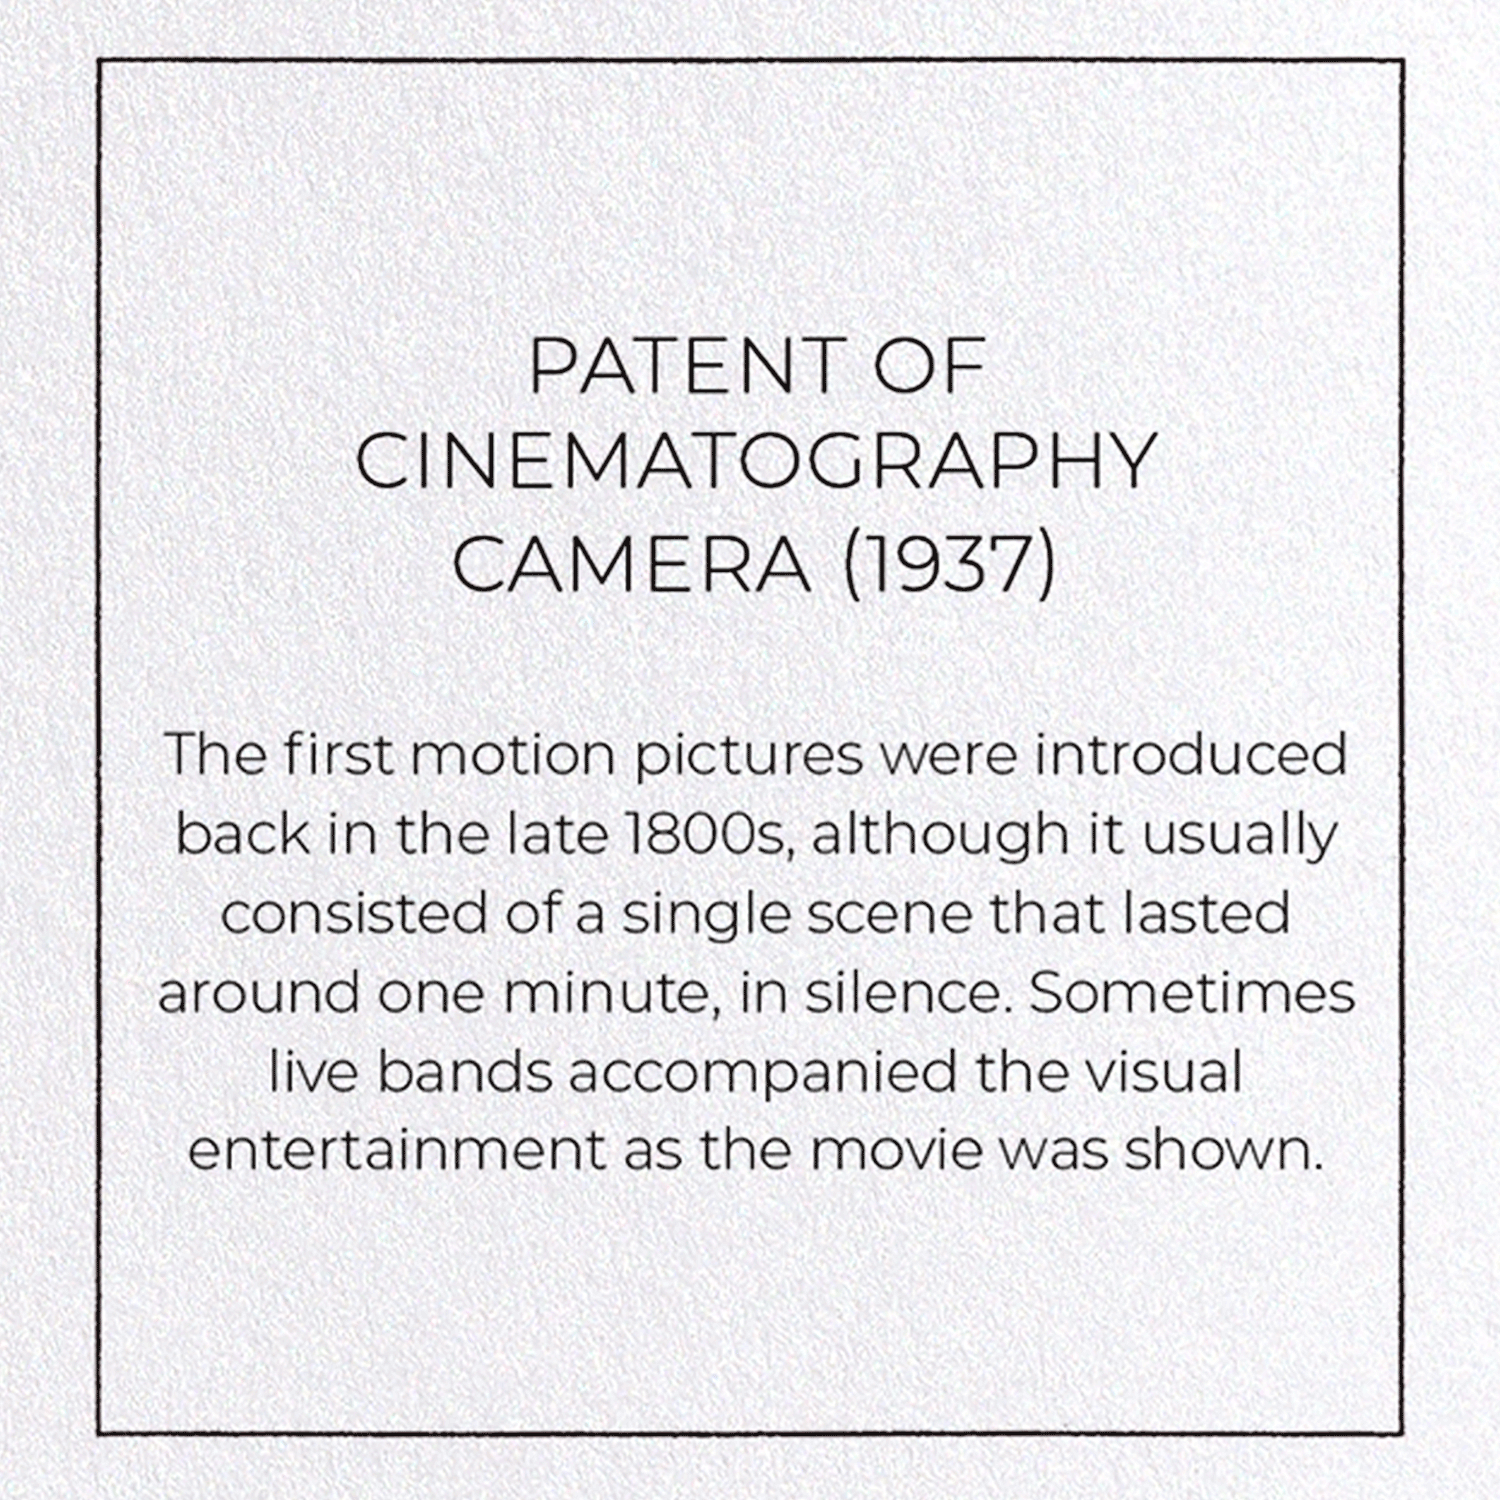 PATENT OF CINEMATOGRAPHY CAMERA (1937)